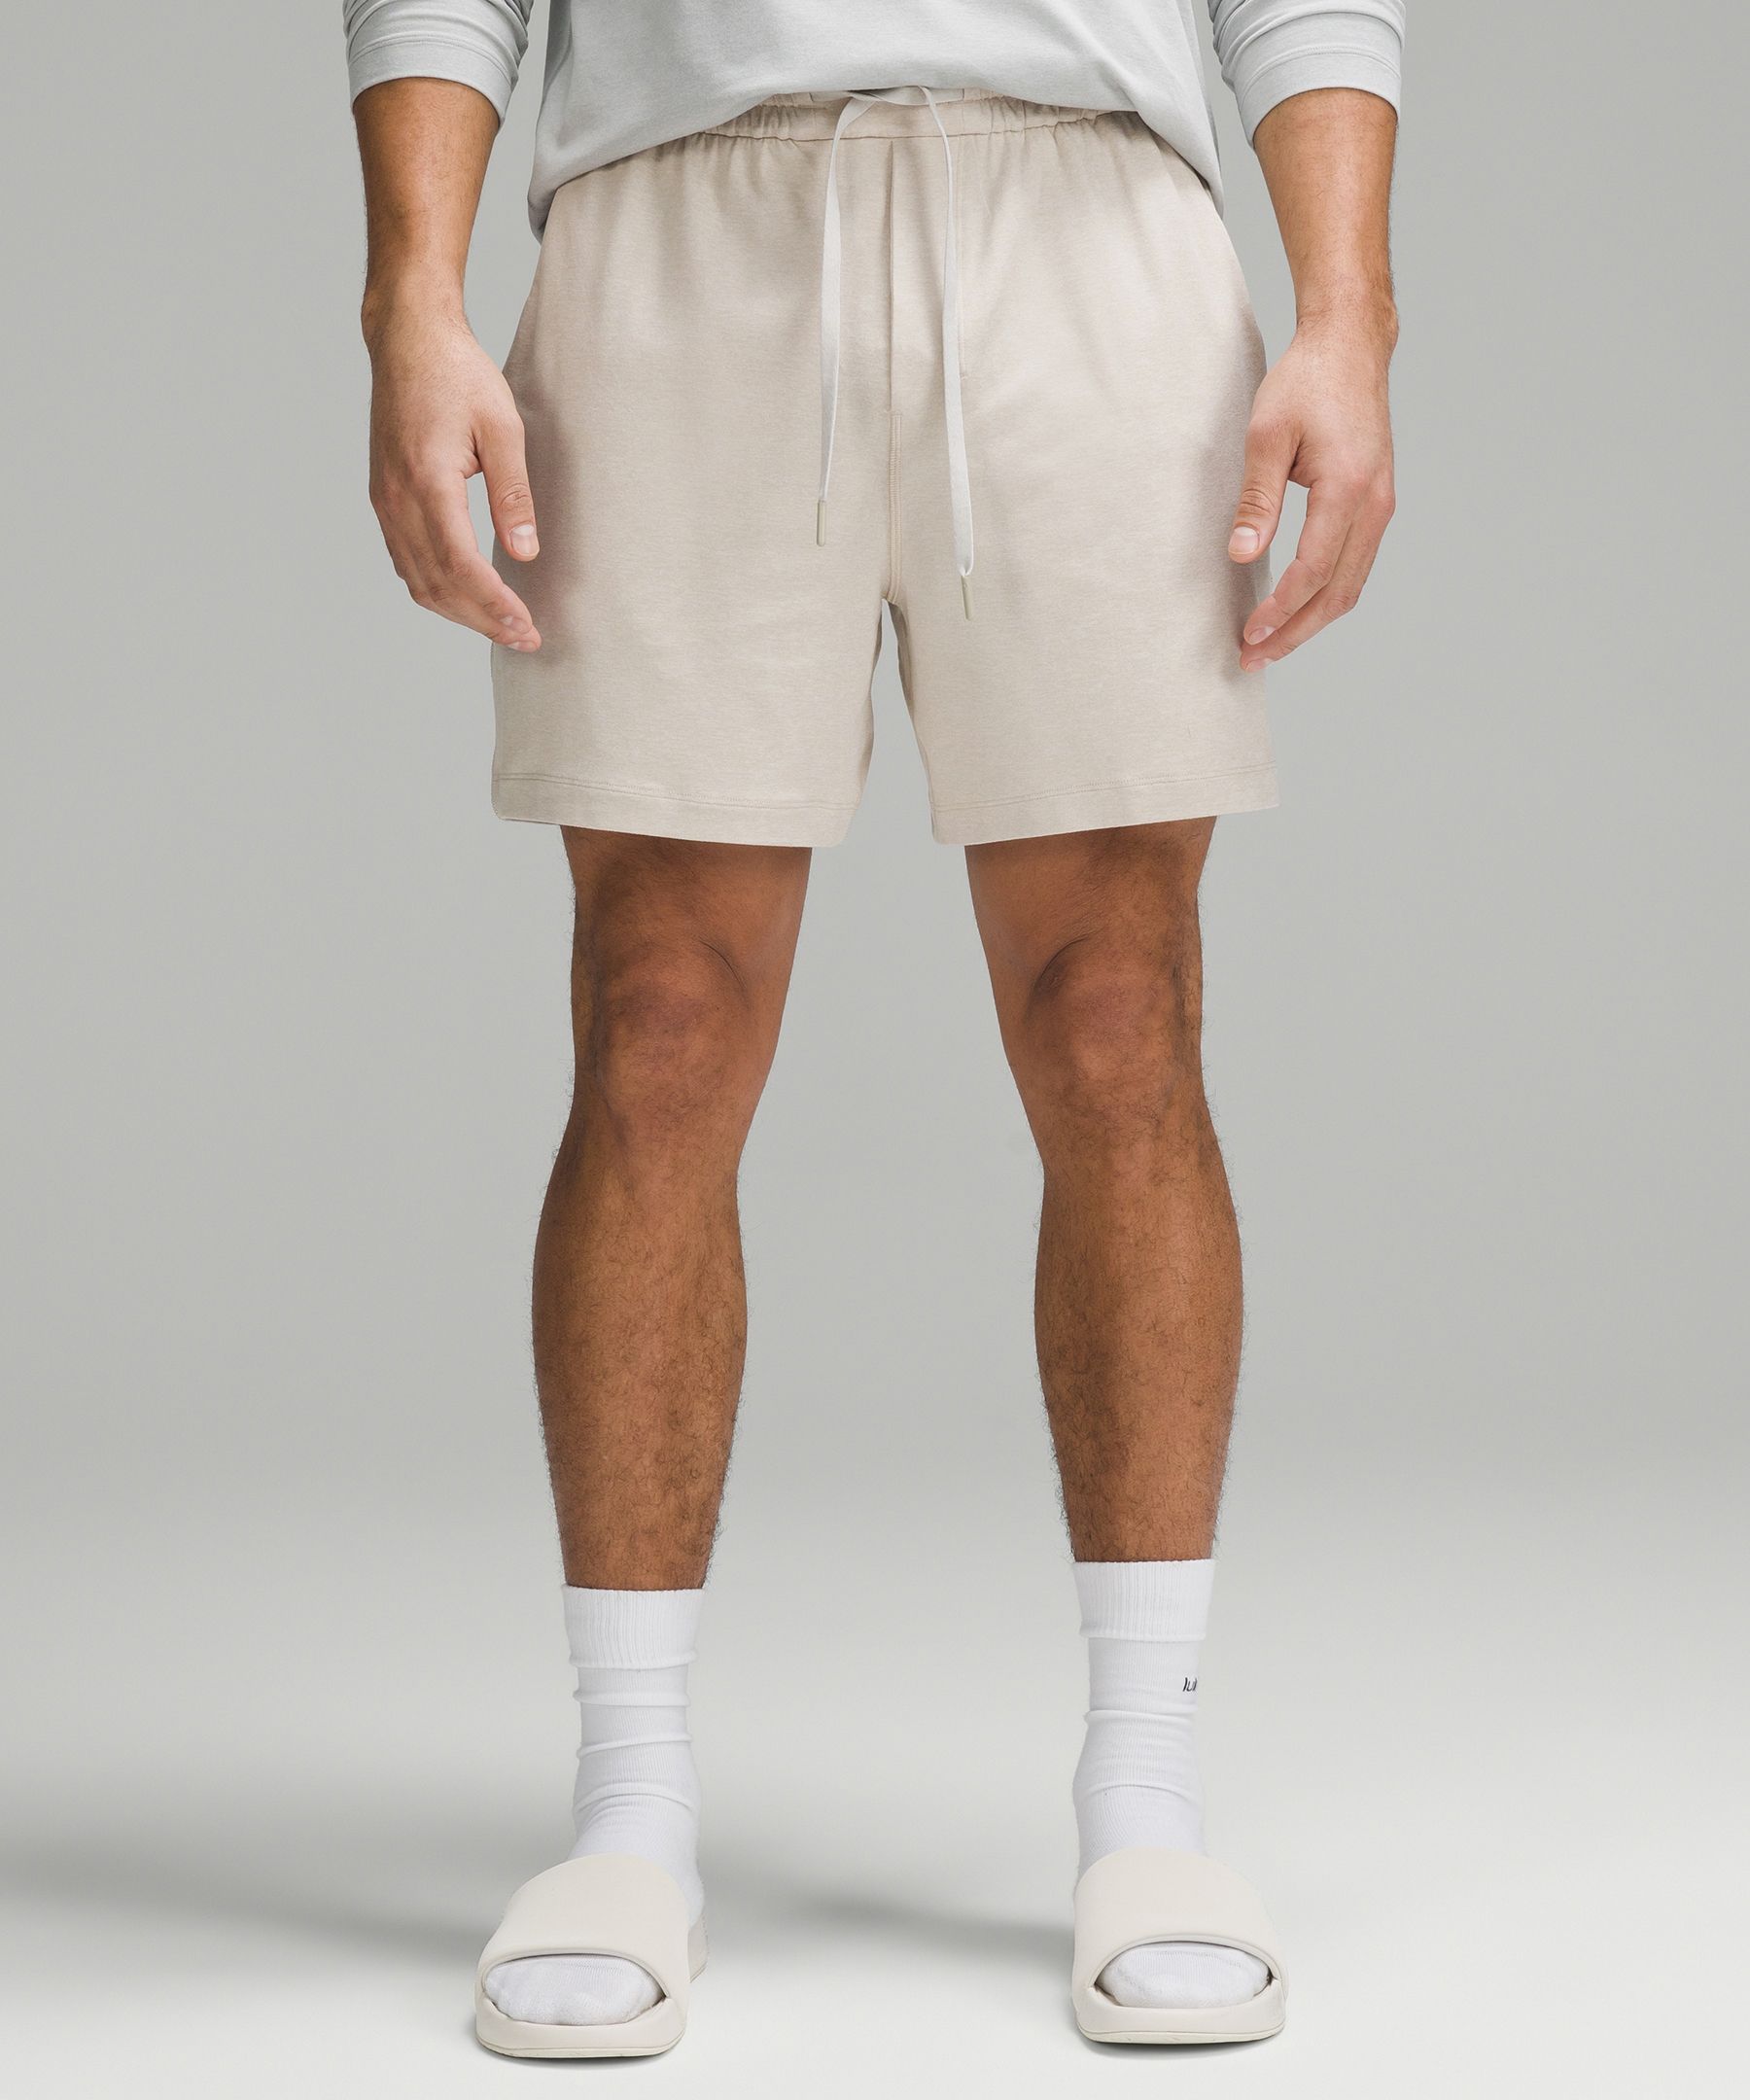 Soft loungewear sweat shorts from Lululemon & . 🔗 in b!o